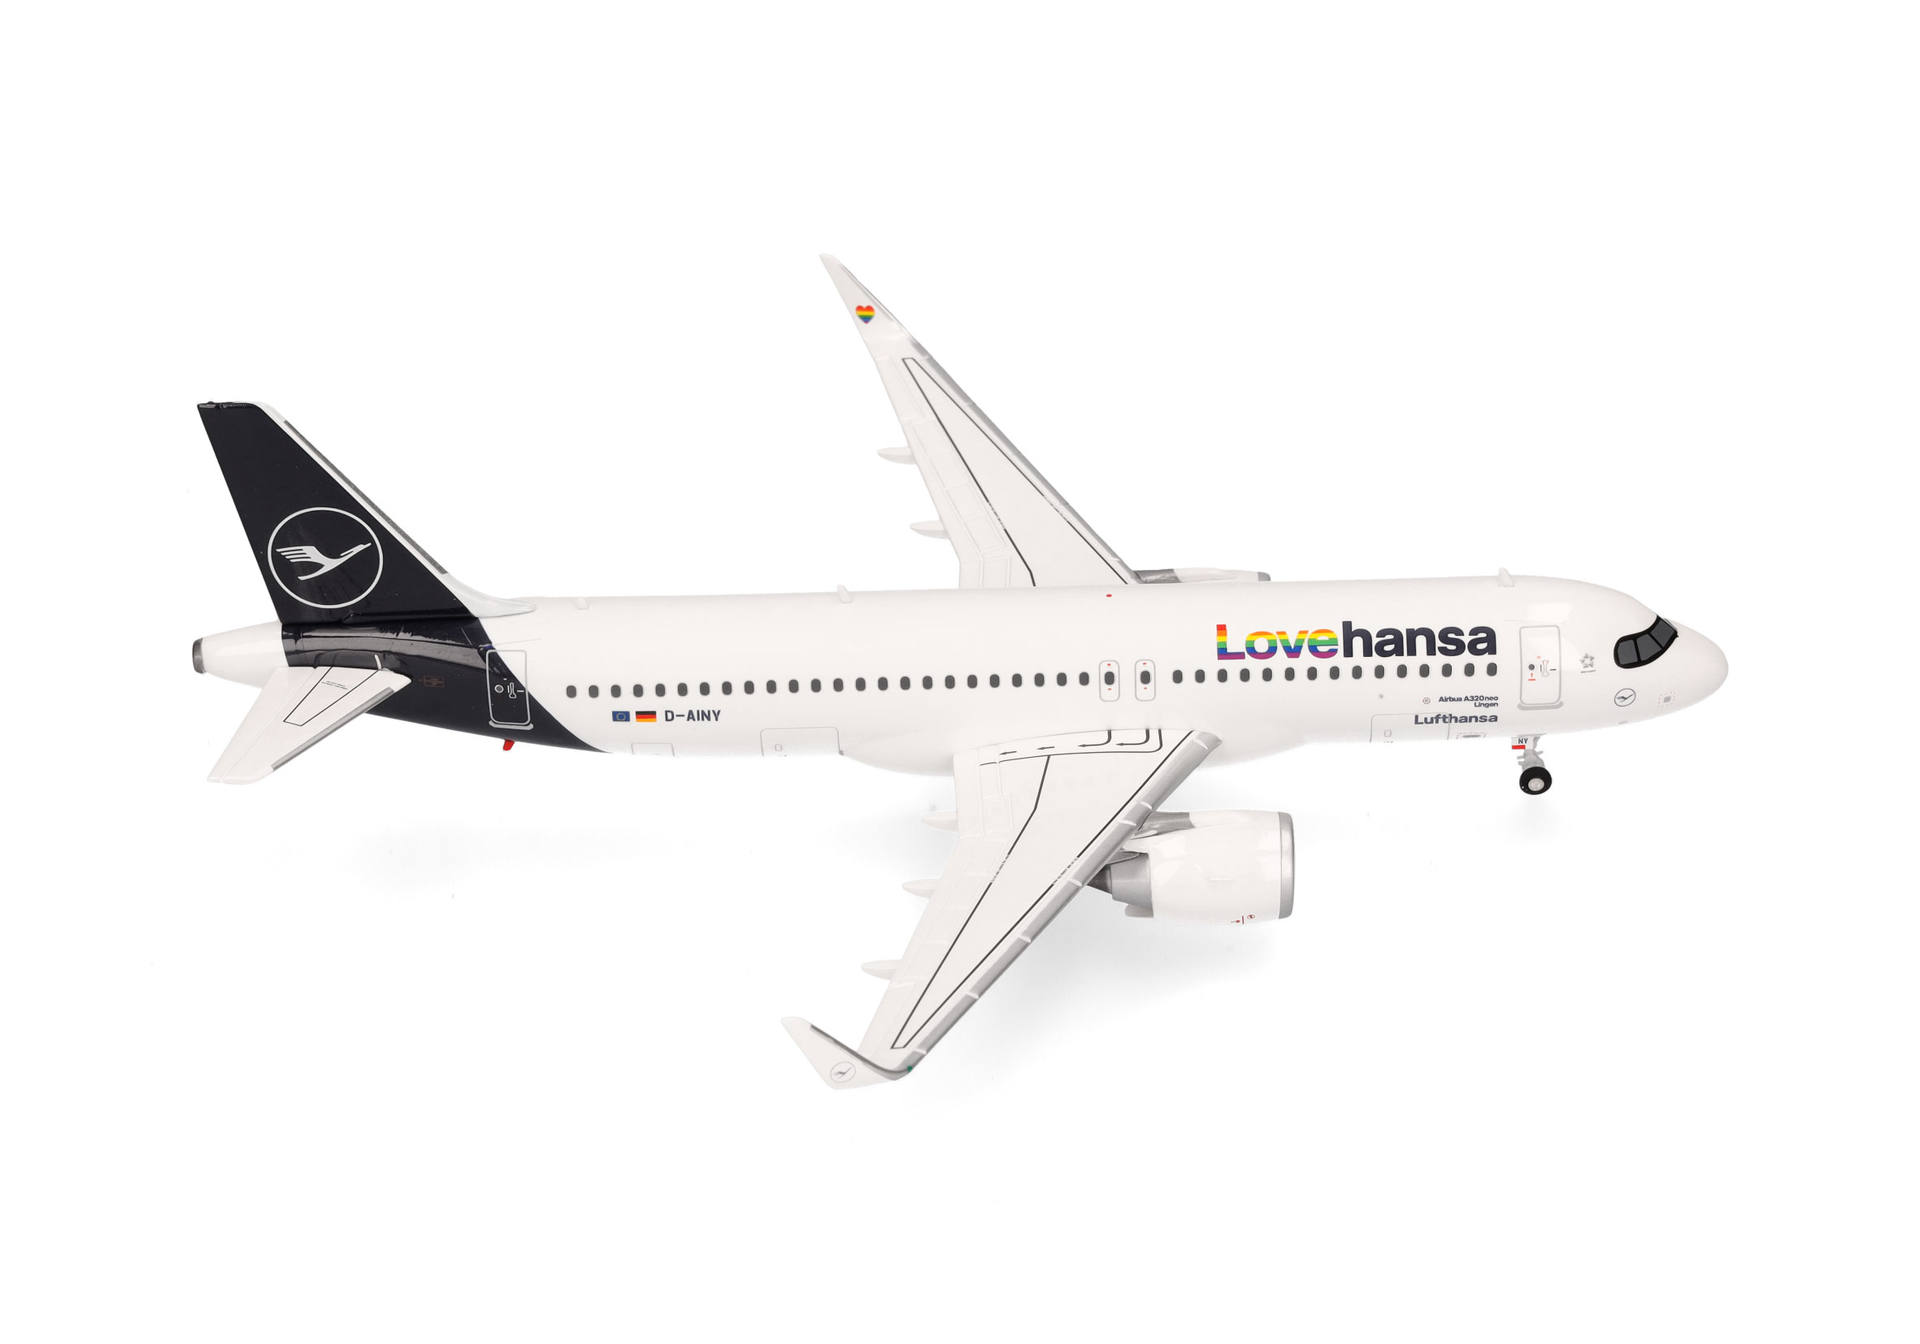 Lufthansa Airbus A320neo "Lovehansa" – D-AINY "Lingen"